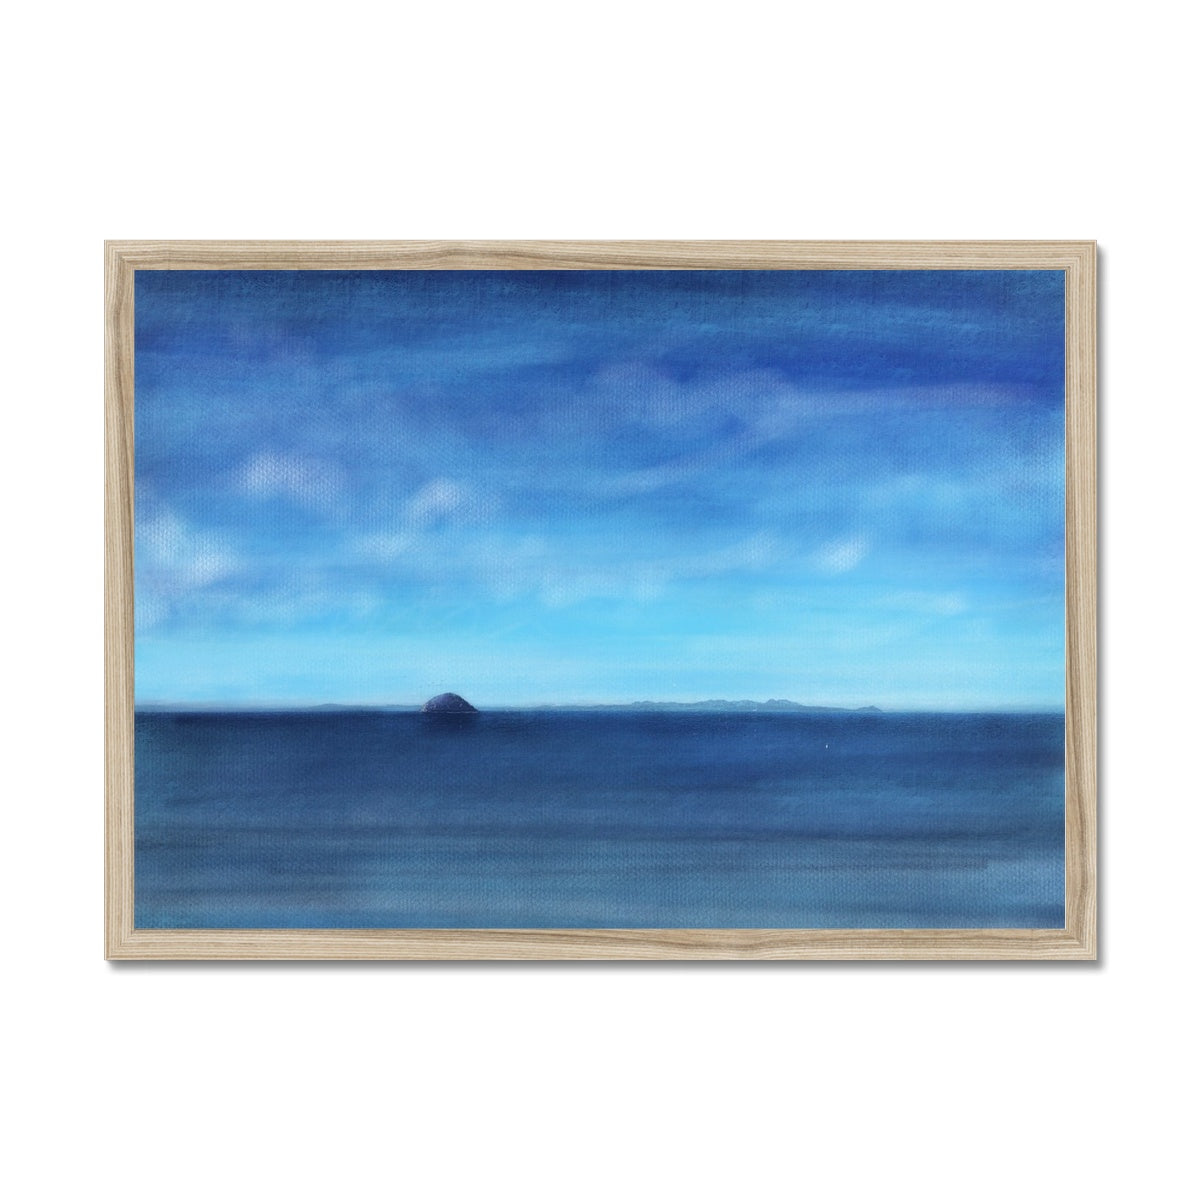 Ailsa Craig & Arran Painting | Framed Prints From Scotland-Framed Prints-Arran Art Gallery-A2 Landscape-Natural Frame-Paintings, Prints, Homeware, Art Gifts From Scotland By Scottish Artist Kevin Hunter